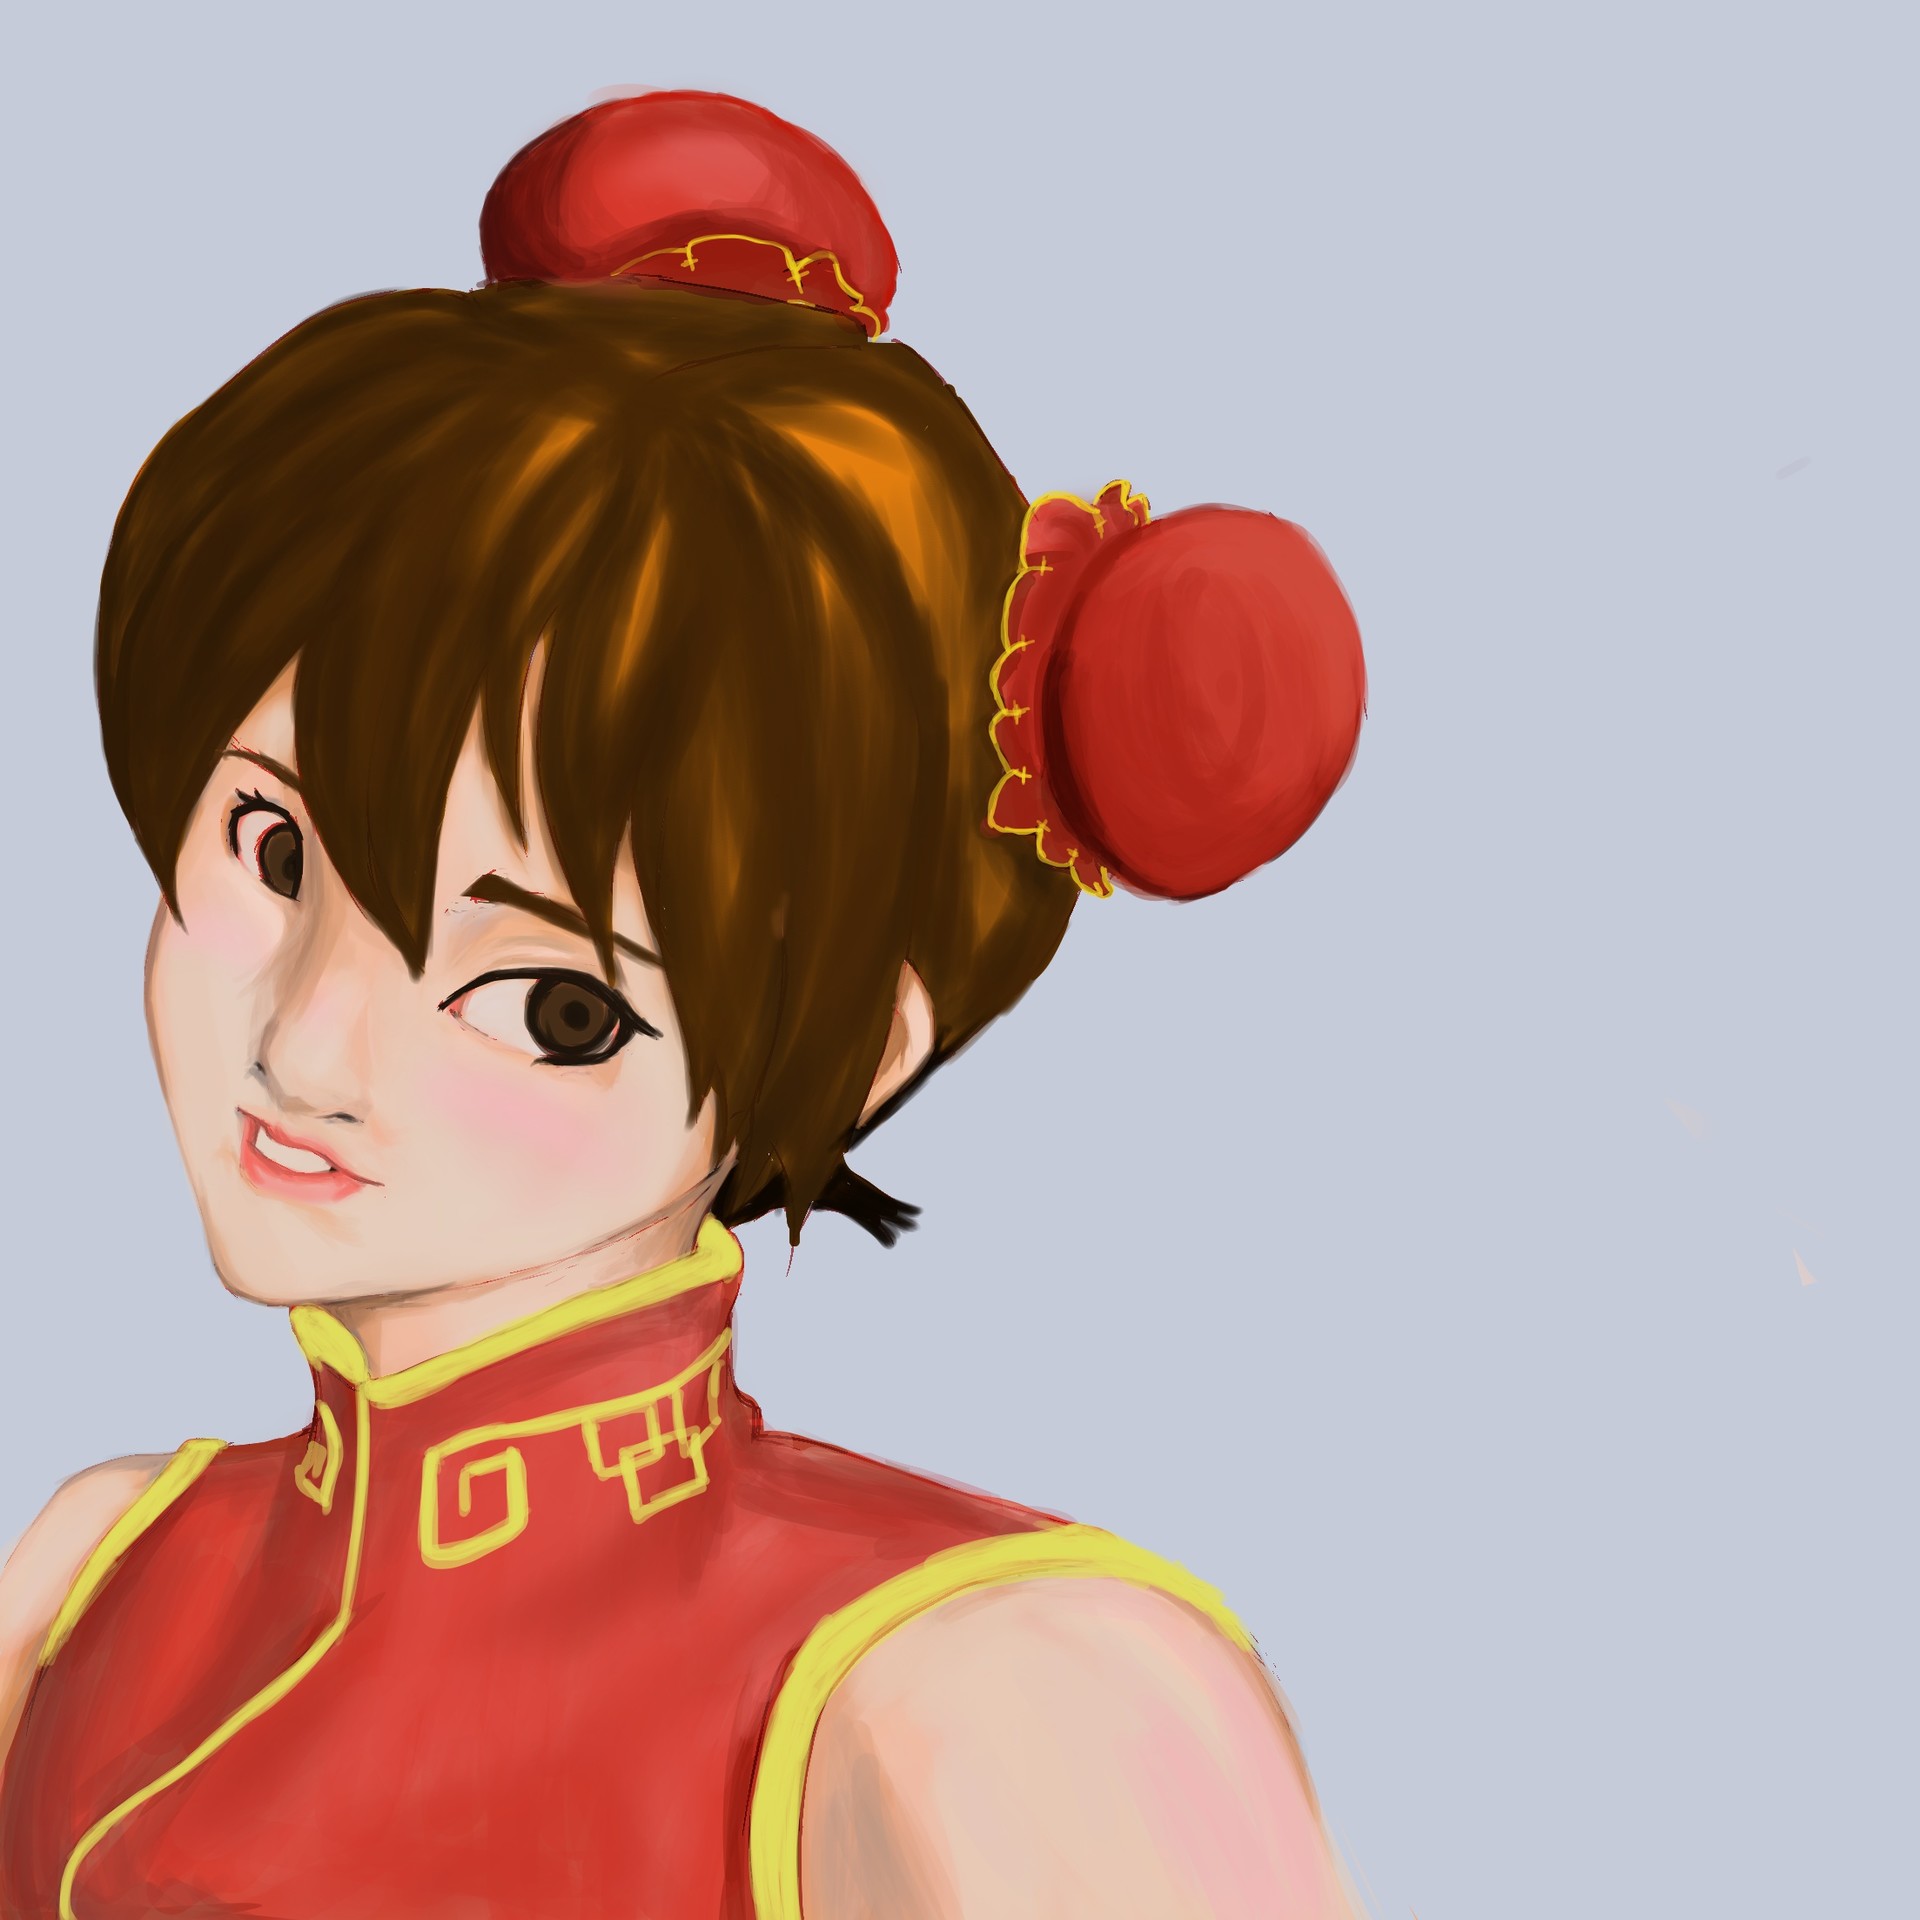 ArtStation - Anime Girl - Wearing a Chinese Dress